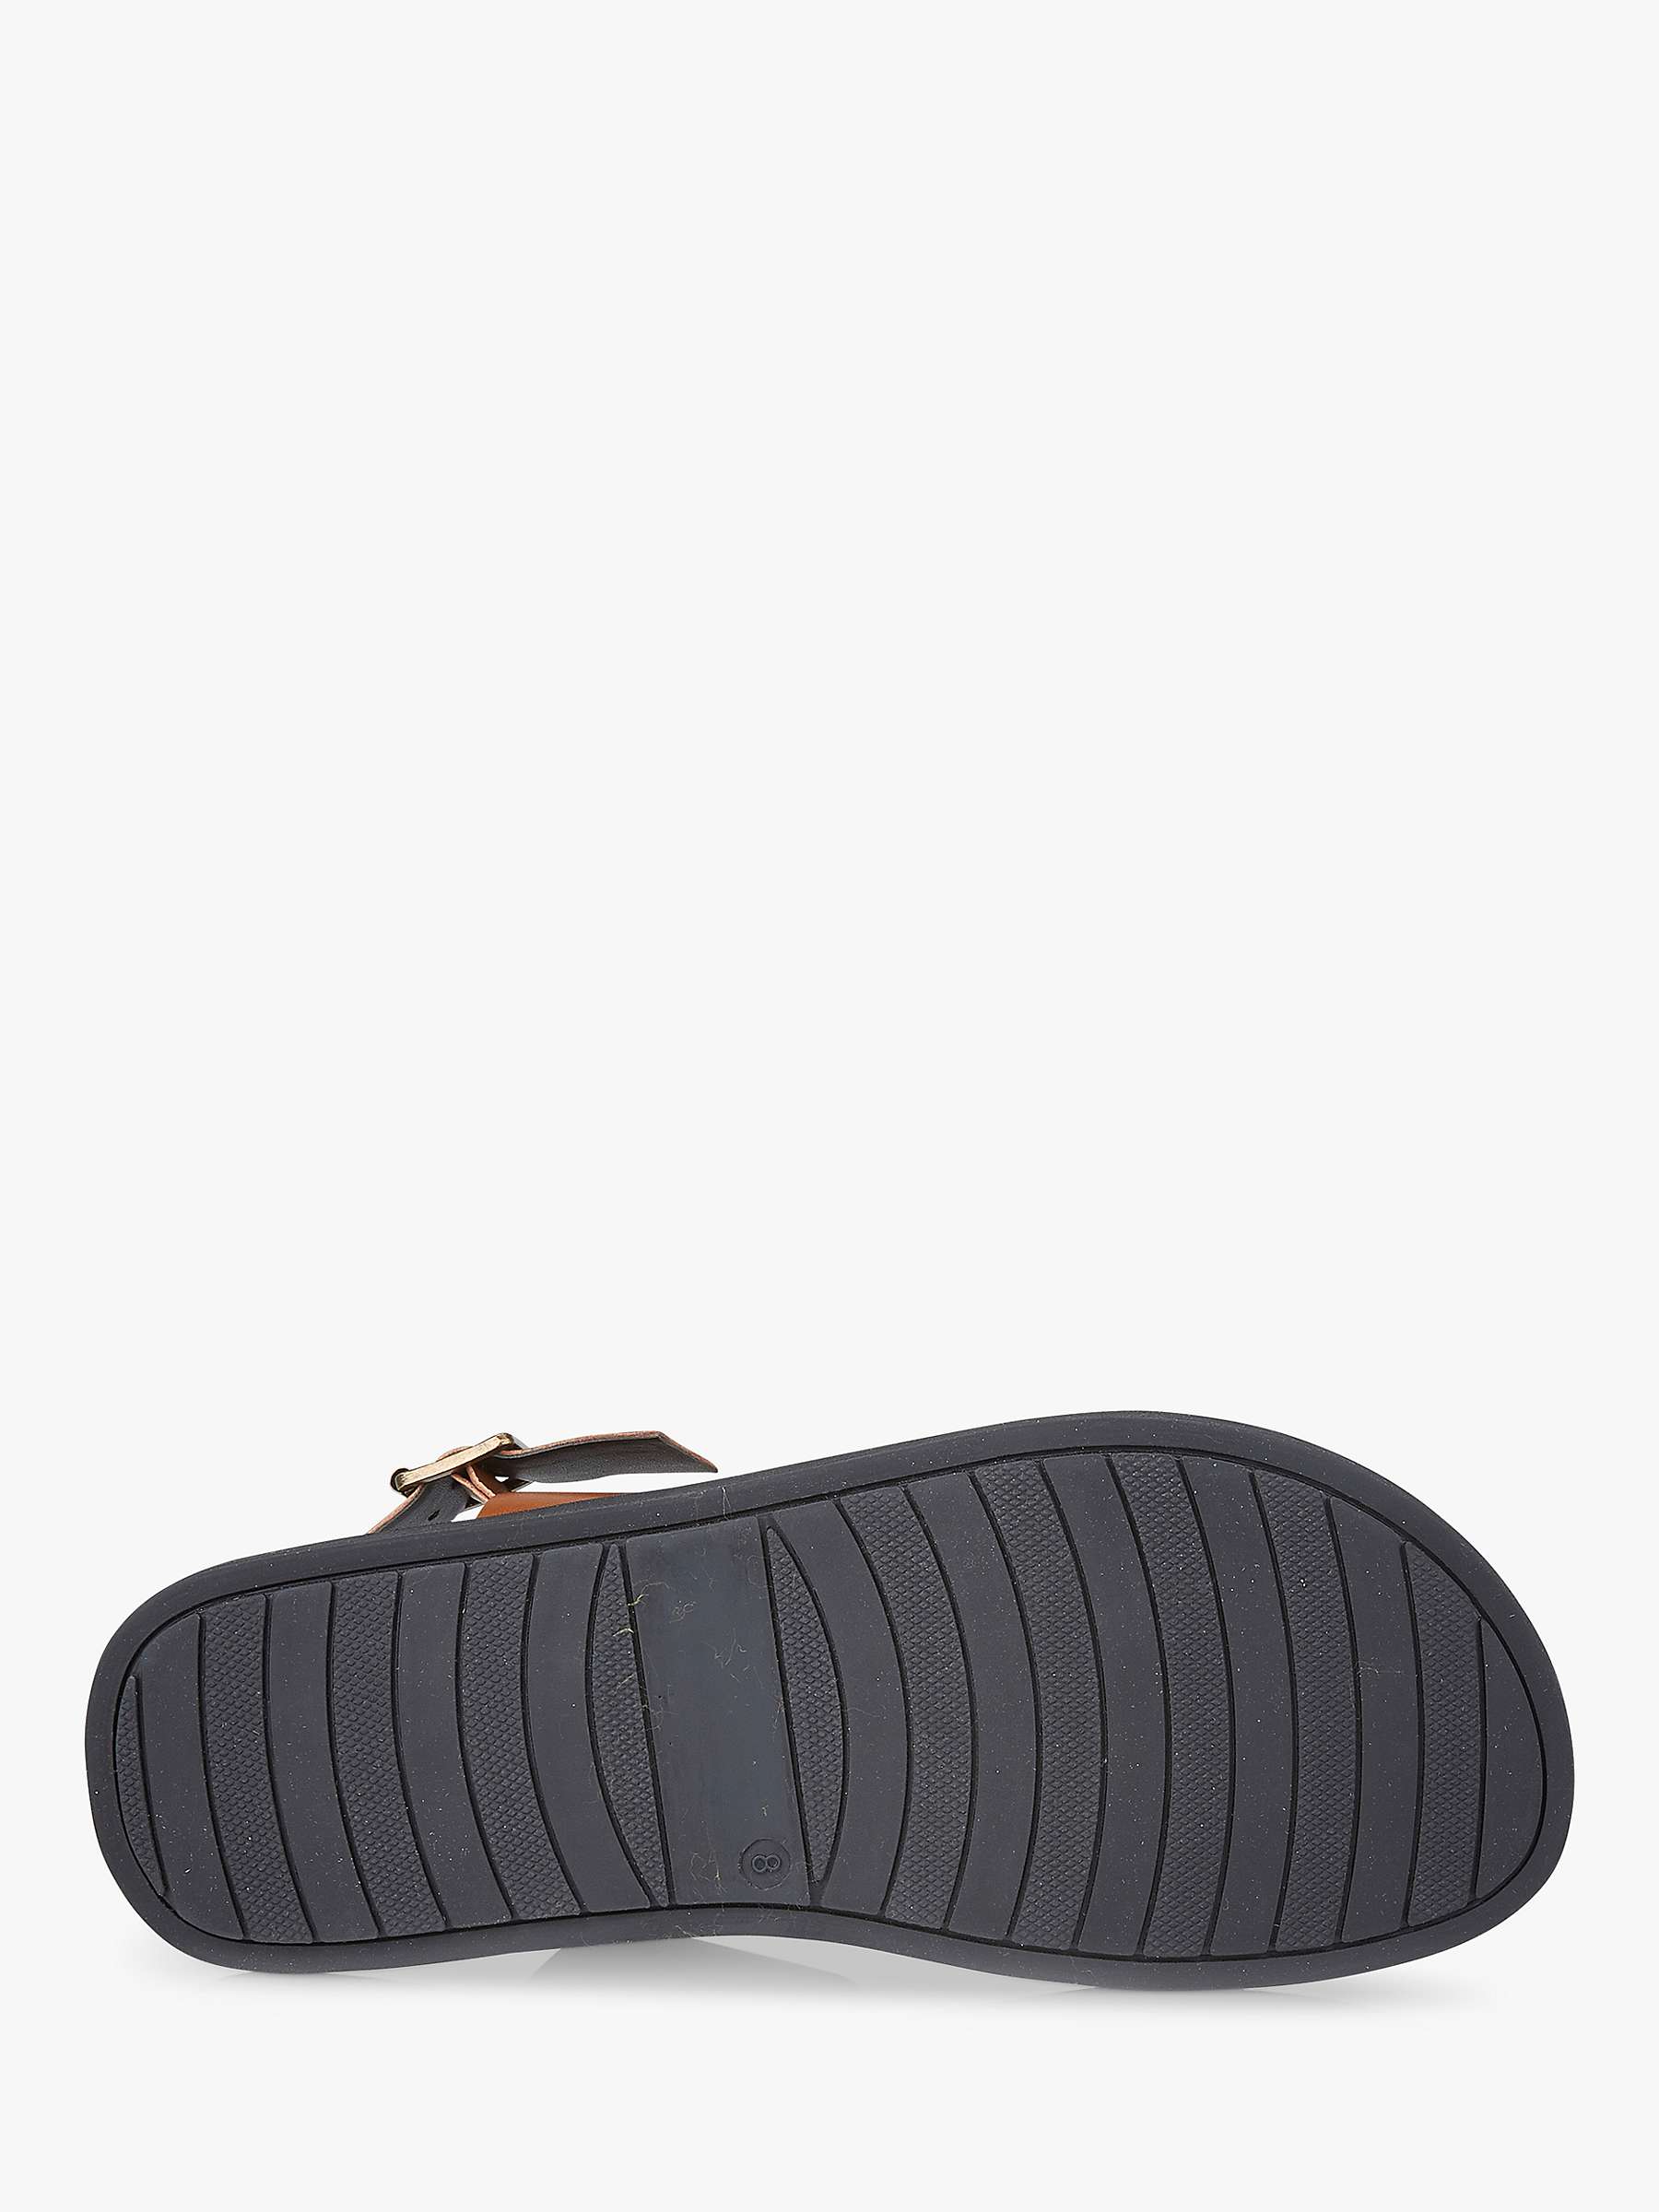 Buy Silver Street London Mitcham Leather Sandals, Black/Tan Online at johnlewis.com